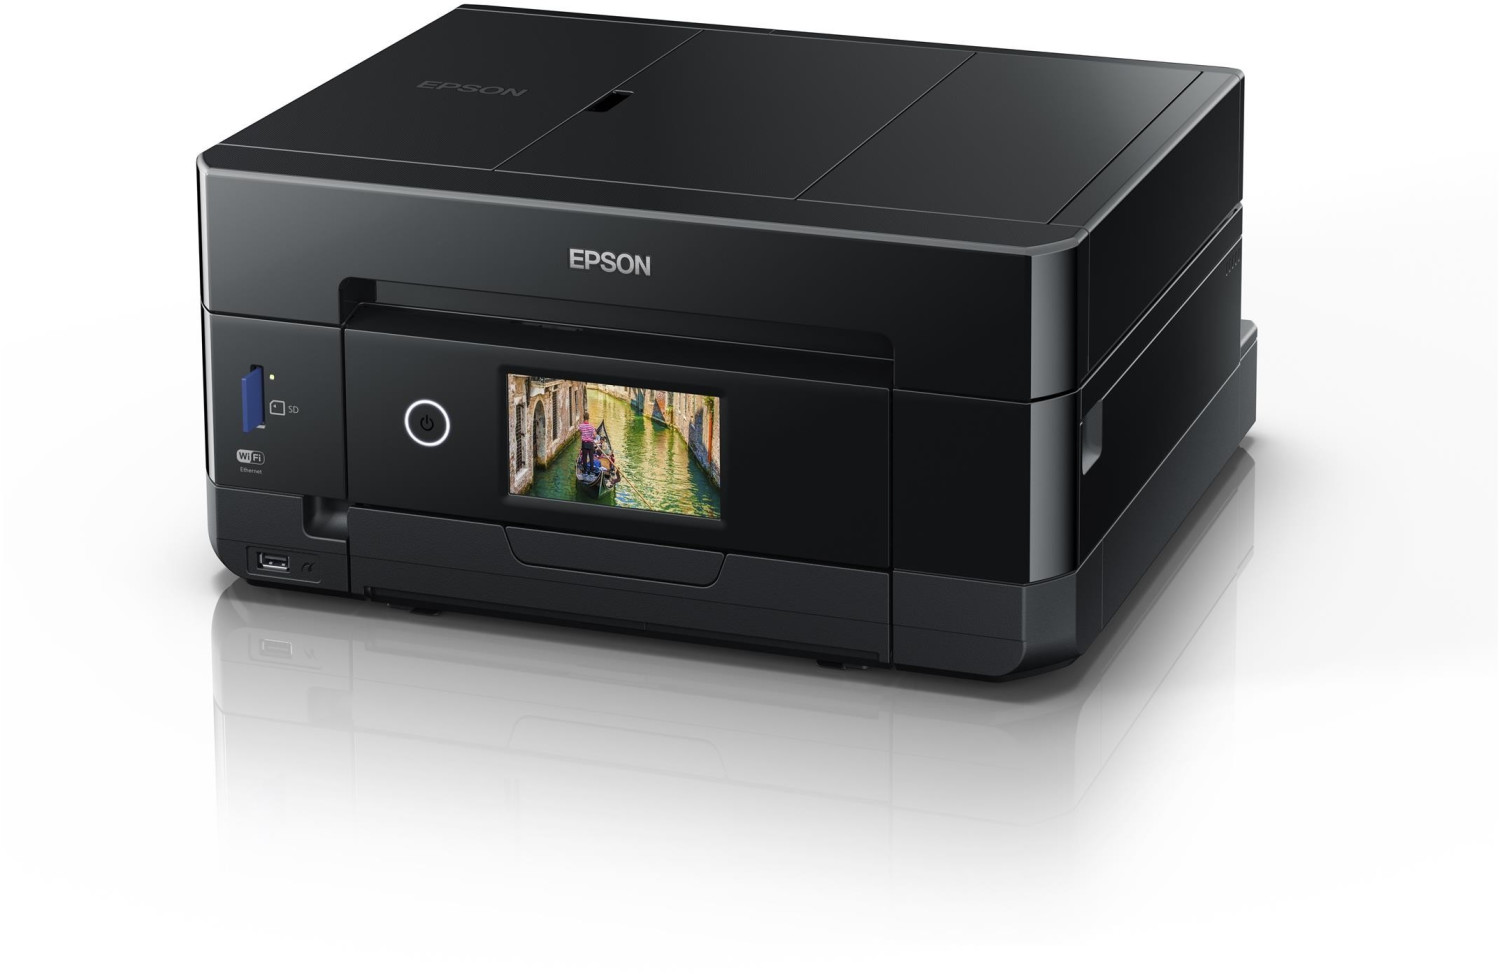 Epson XP-6105 Expression Premium Wireless Inkjet Printer for sale